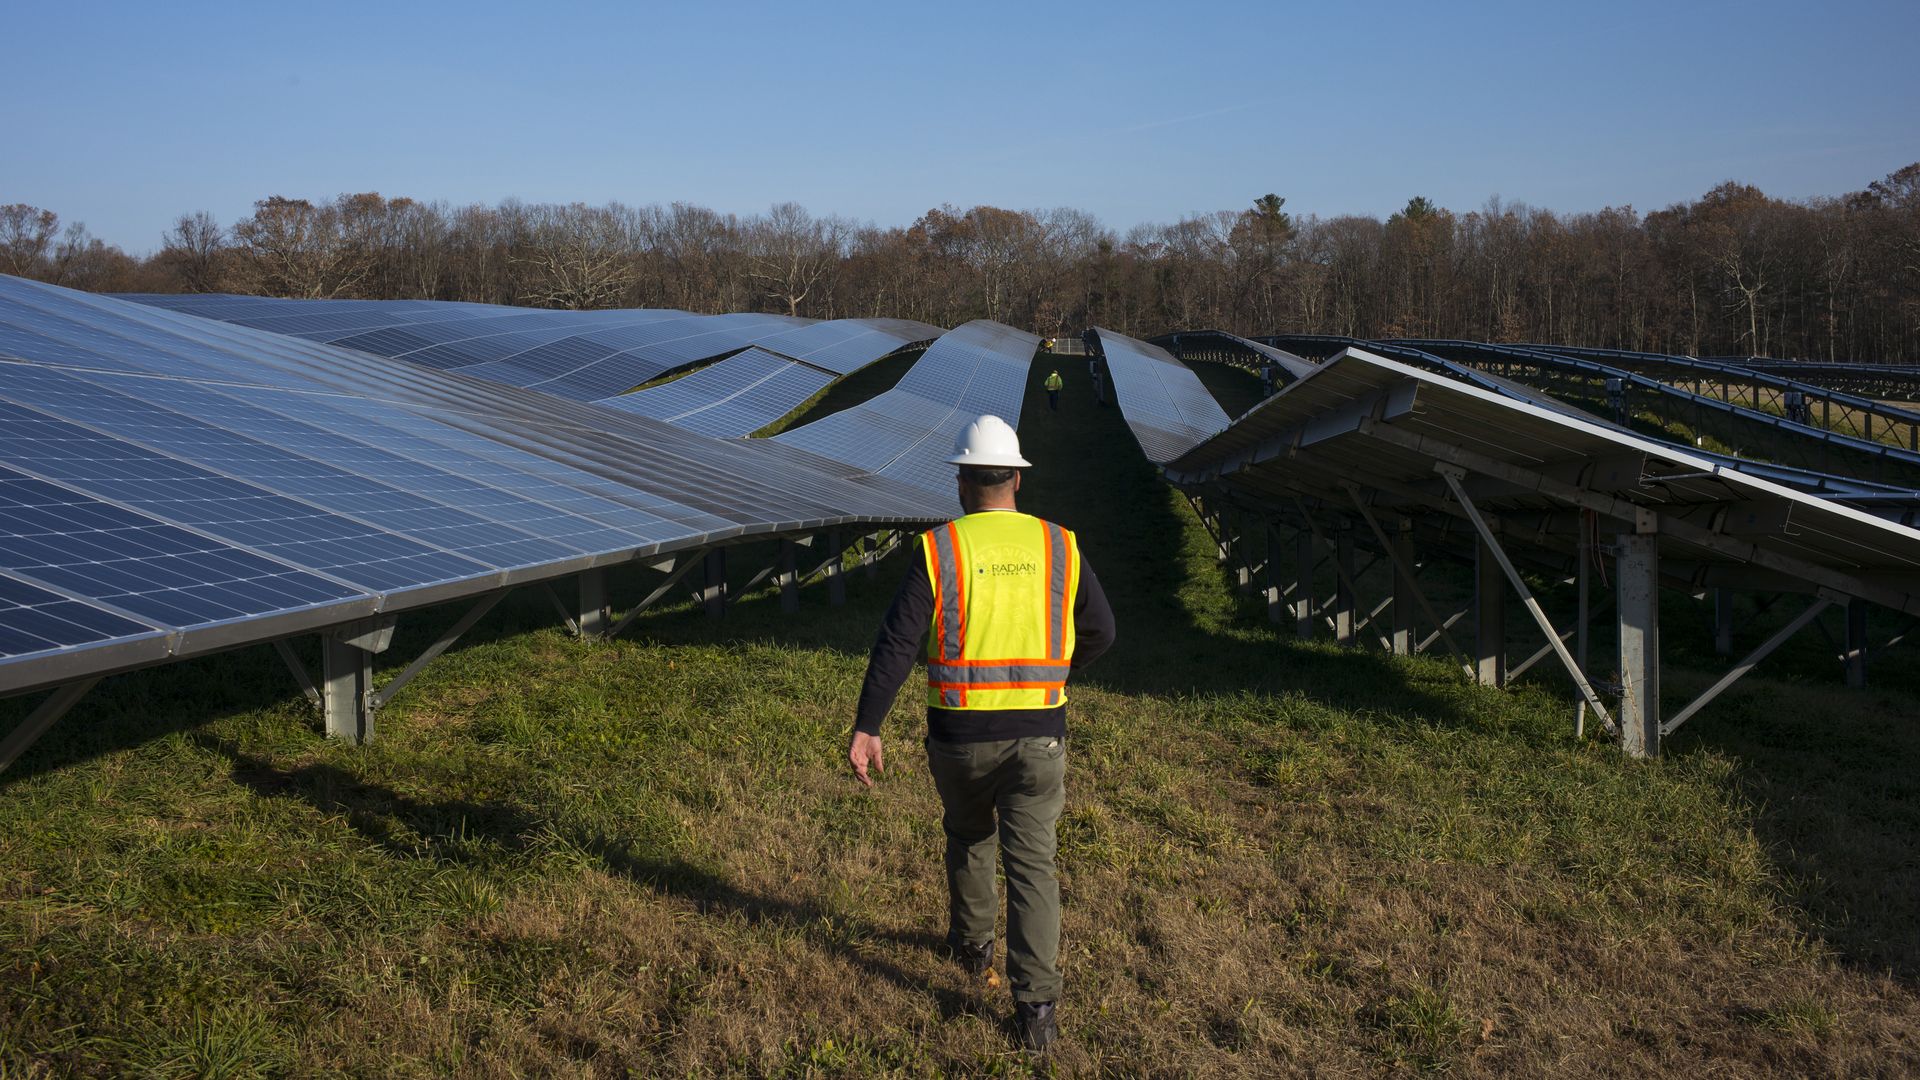 A man walks through a field with solar panels